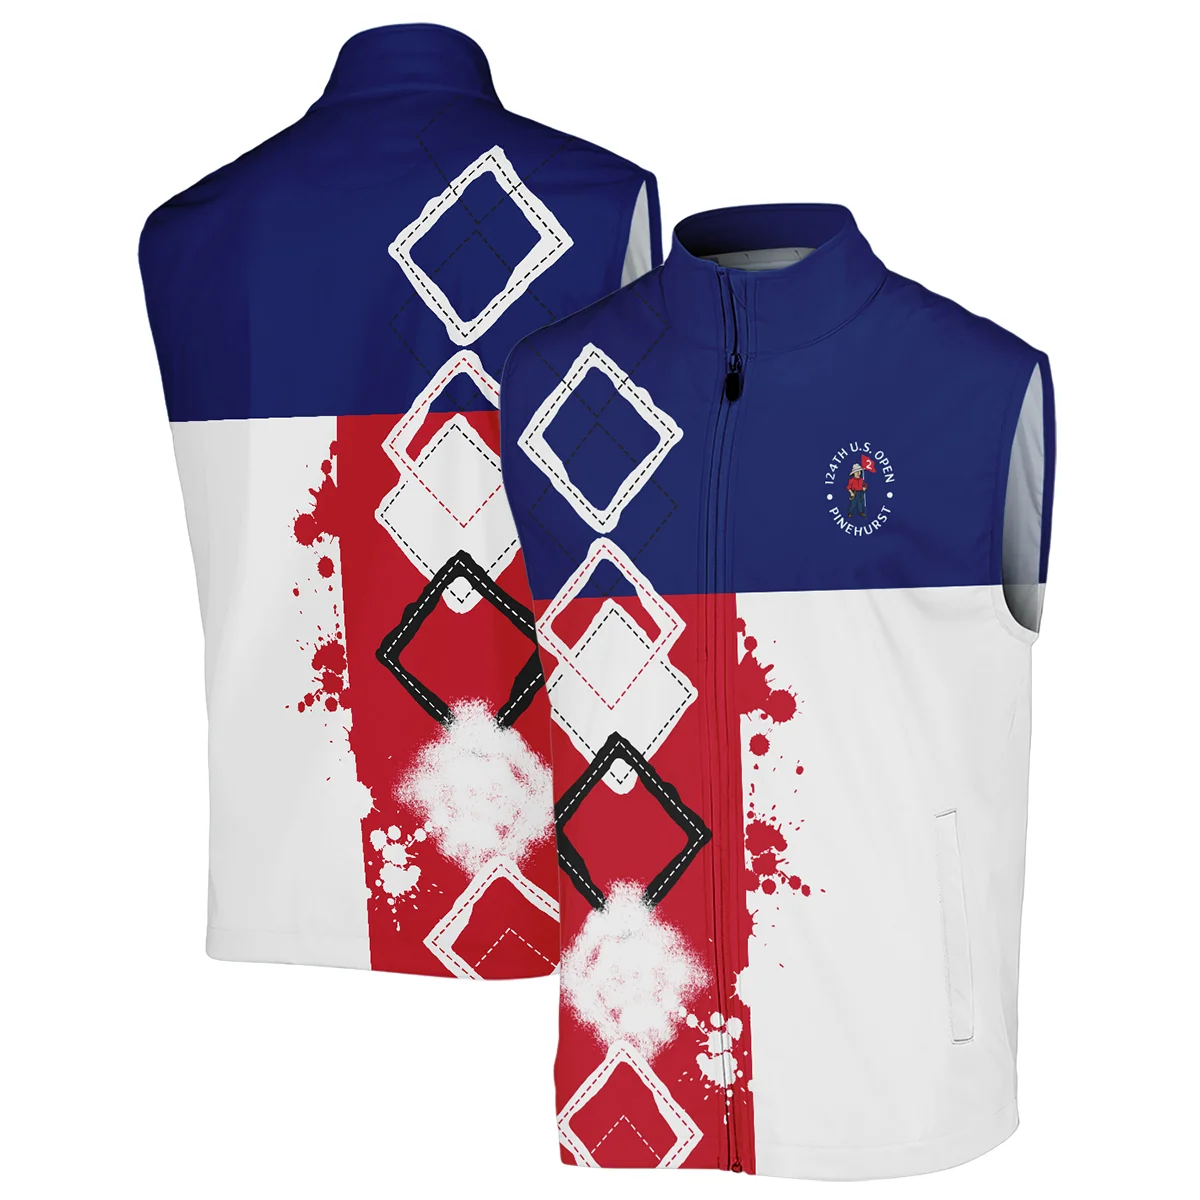 124th U.S. Open Pinehurst Ping Unisex T-Shirt Blue Red White Pattern Grunge All Over Print T-Shirt